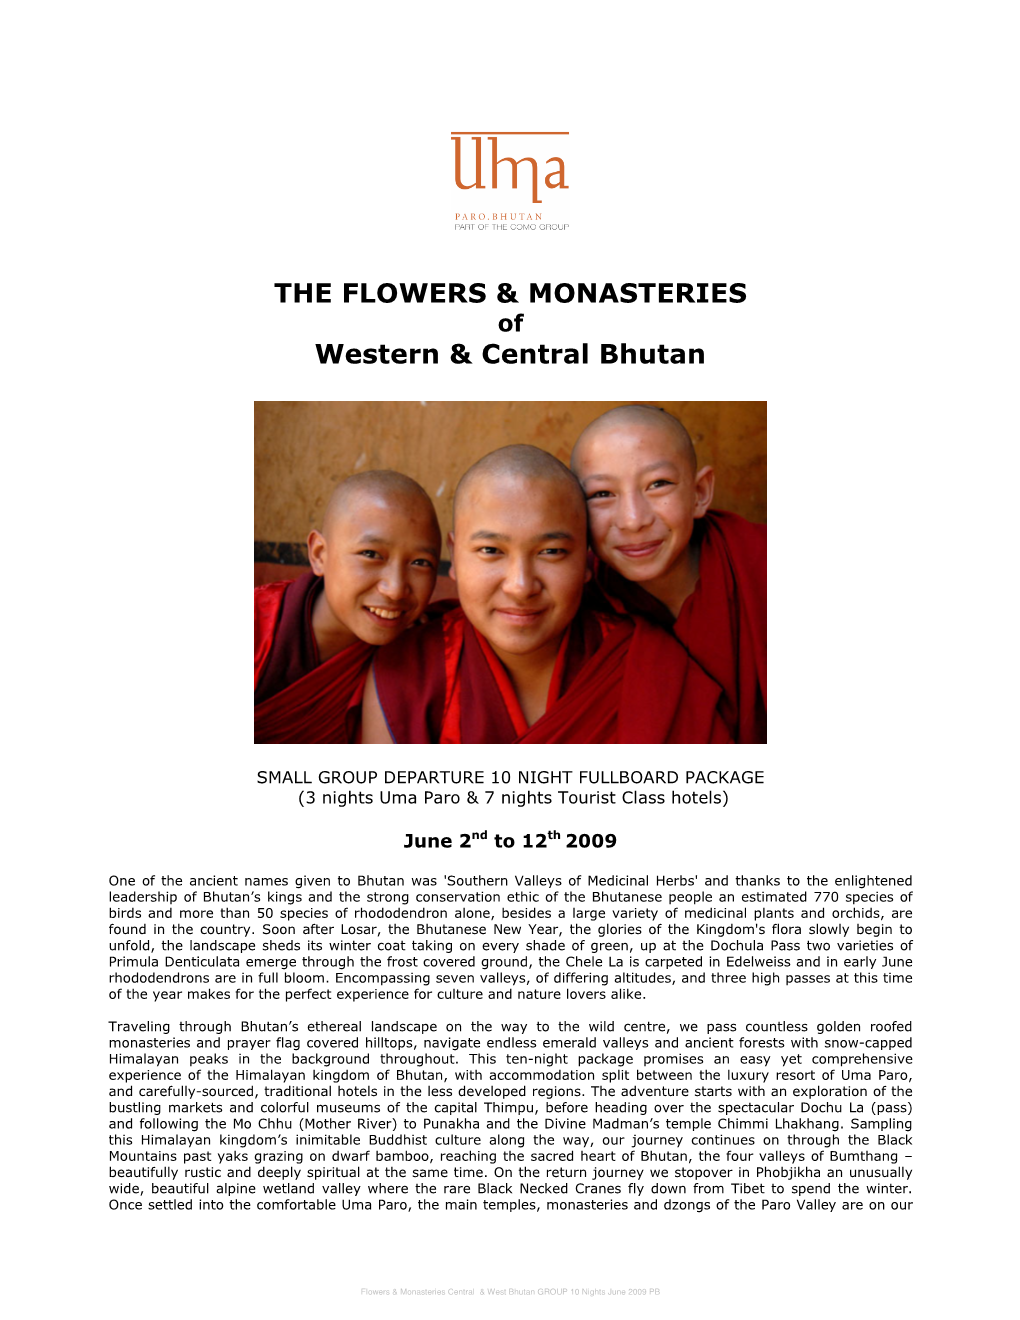 THE FLOWERS & MONASTERIES Western & Central Bhutan